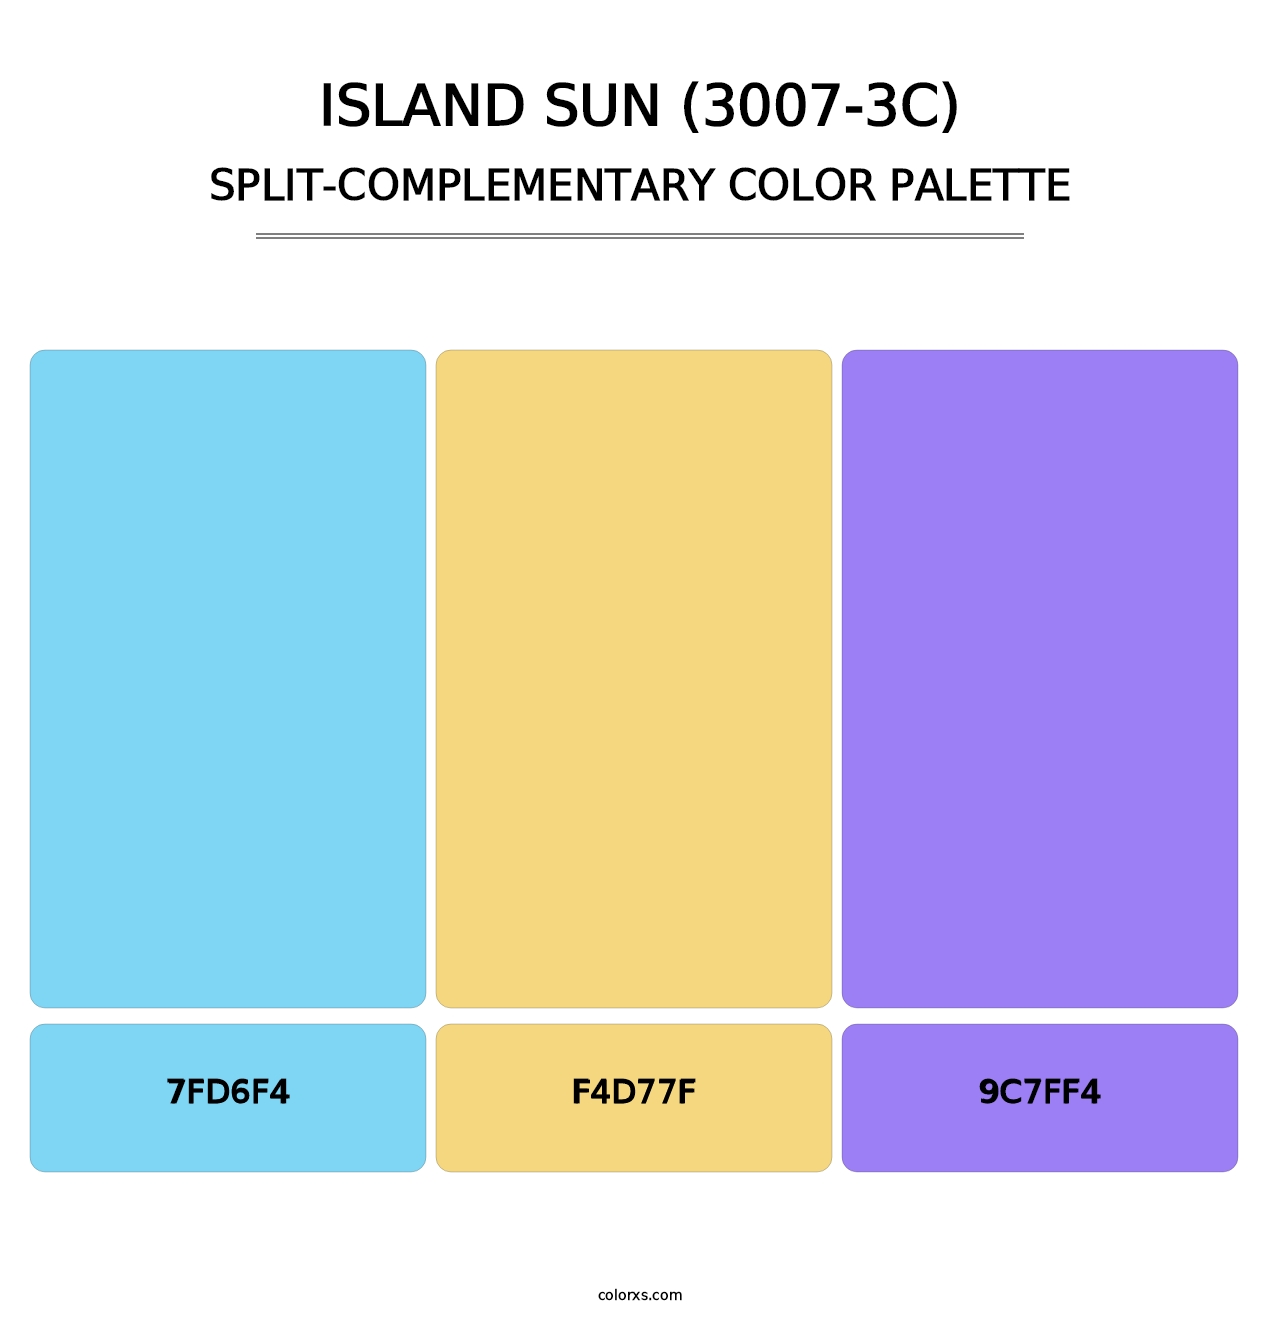 Island Sun (3007-3C) - Split-Complementary Color Palette